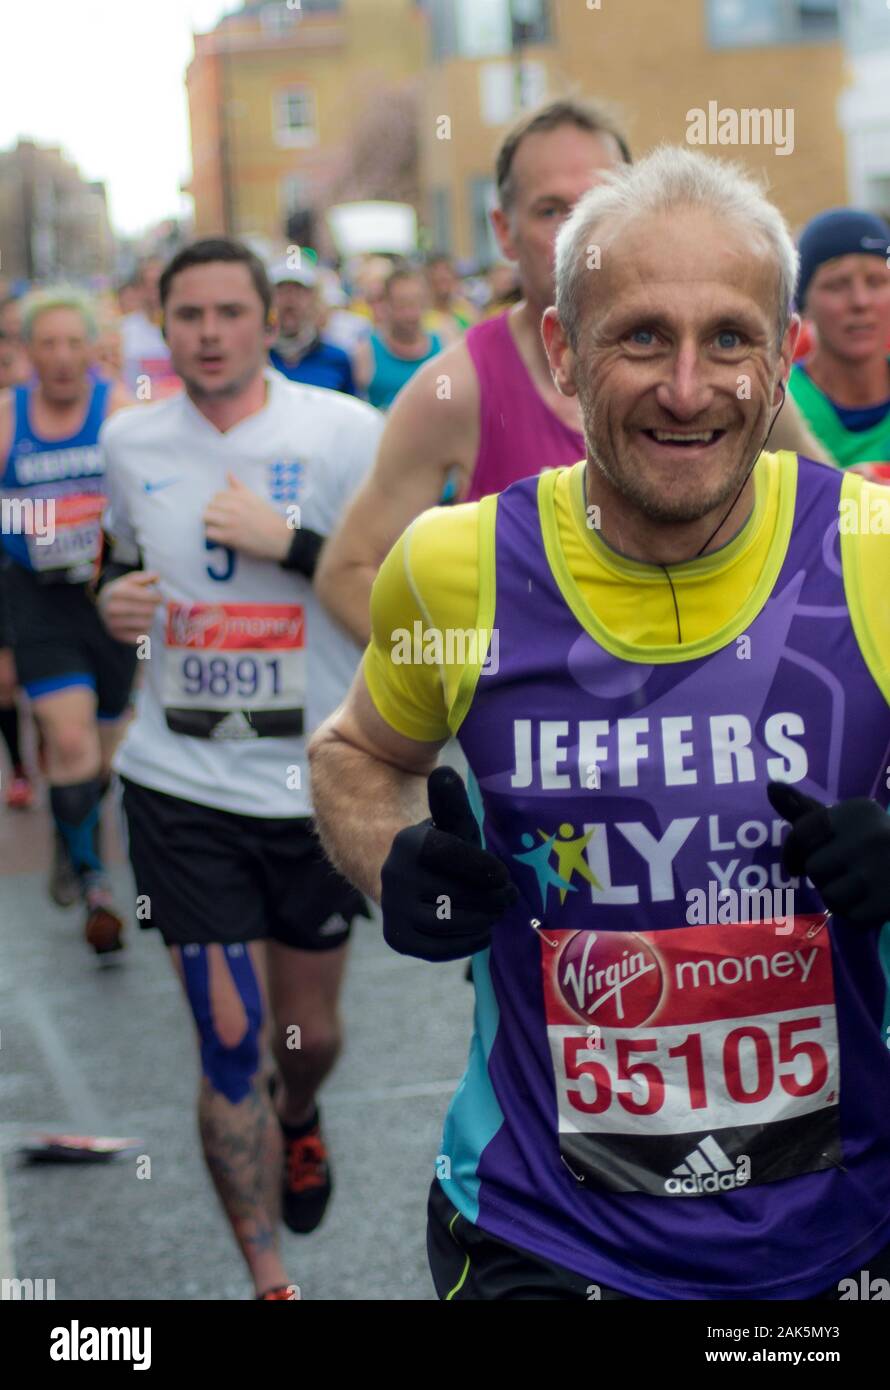 Runners taking part in the Virgin Money London Marathon 2016 fundraising for charity Stock Photo